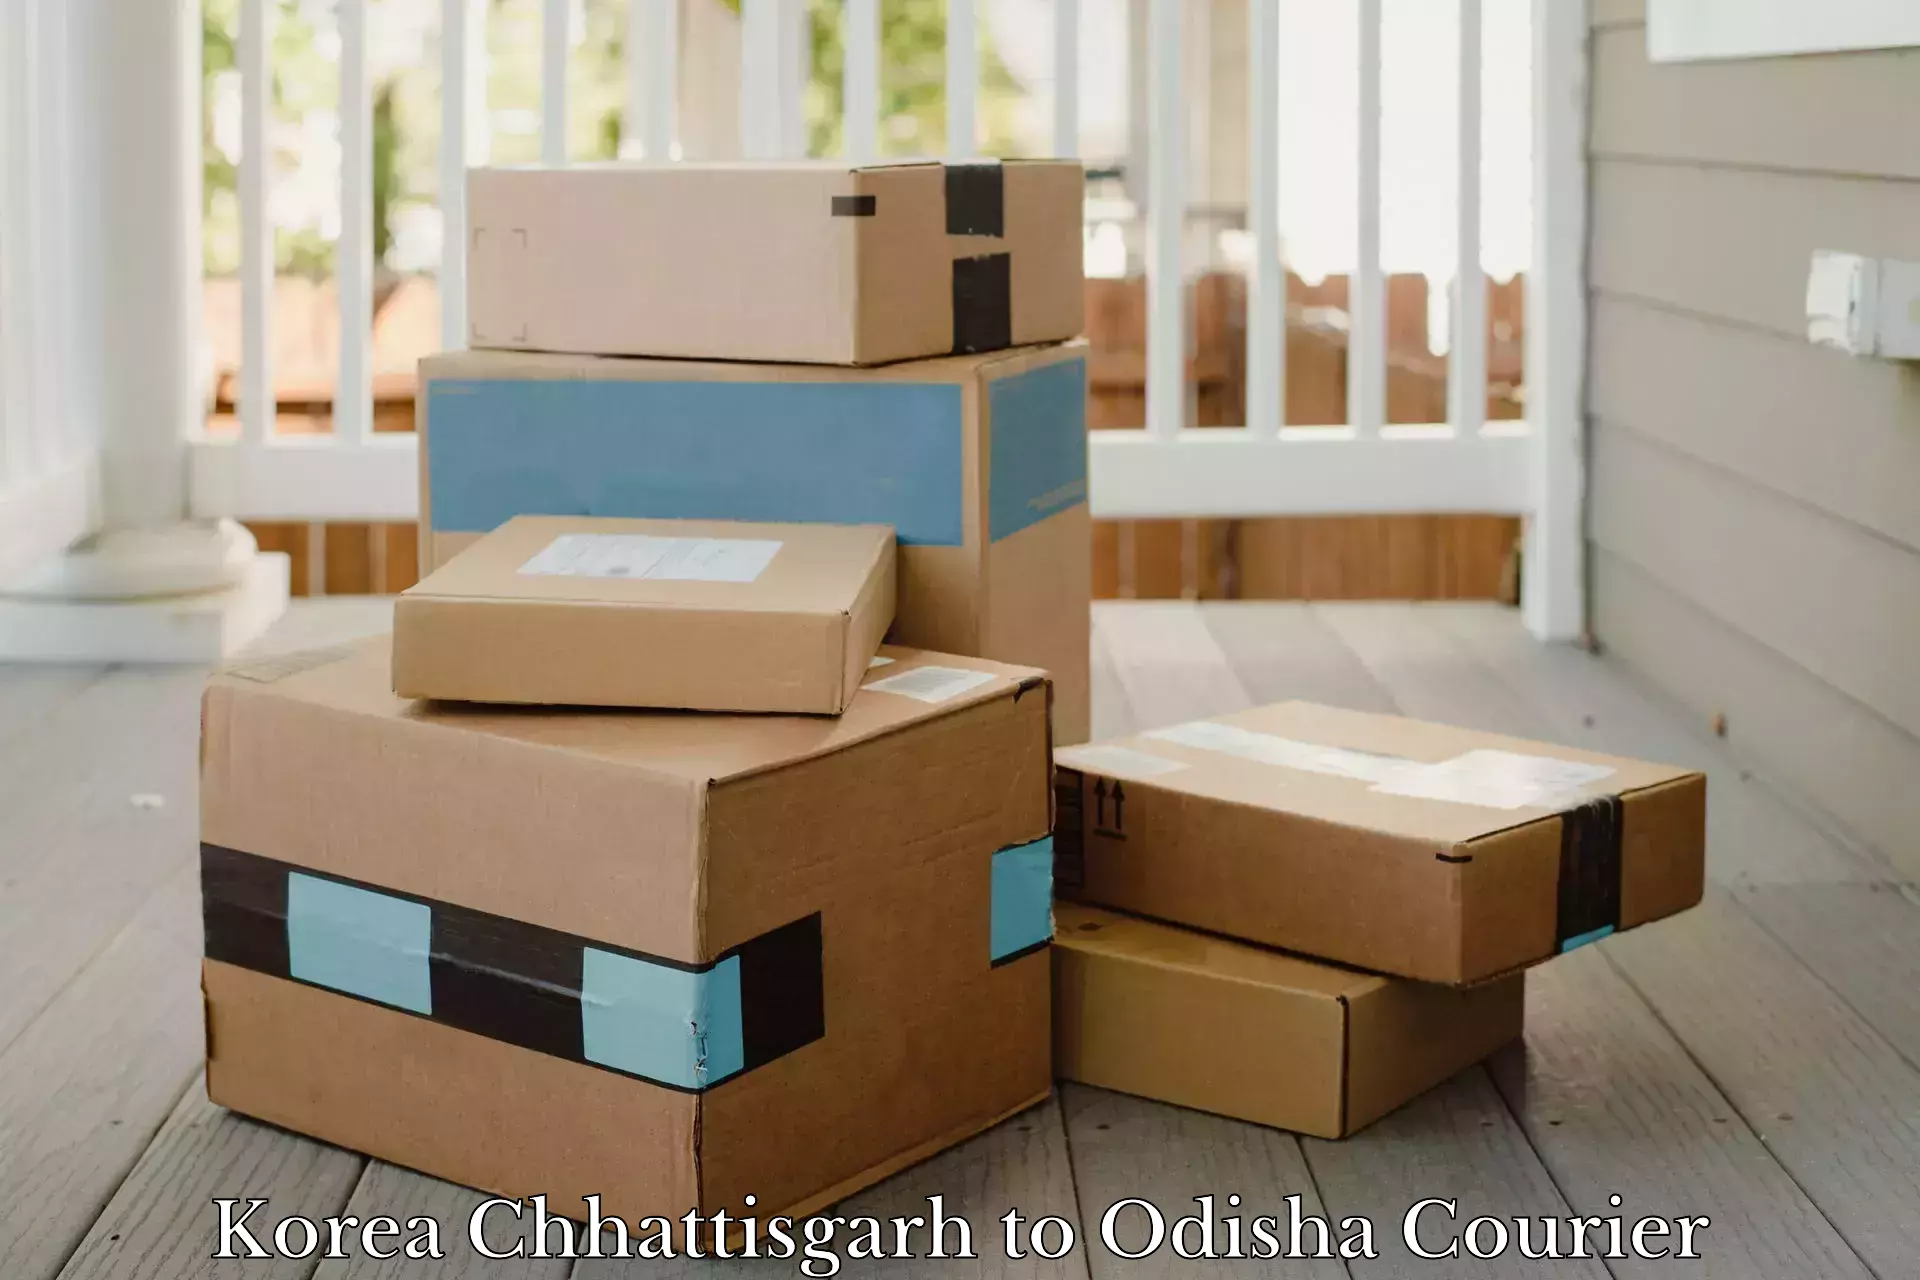 User-friendly courier app Korea Chhattisgarh to Odisha